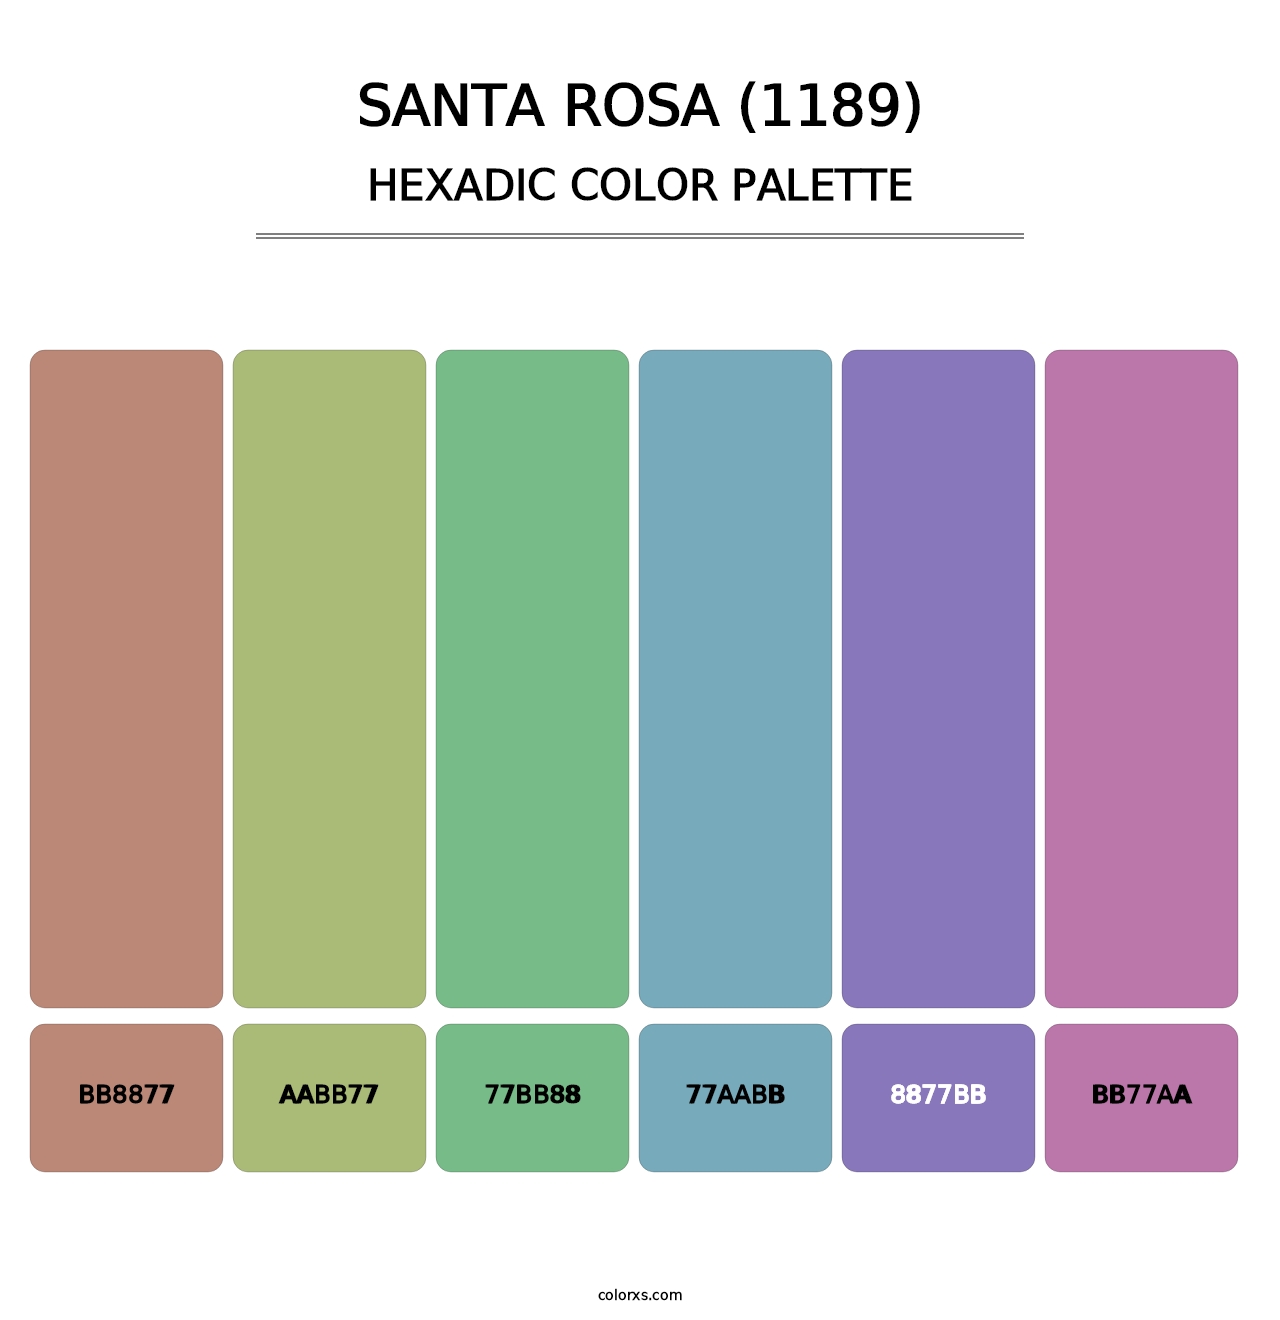 Santa Rosa (1189) - Hexadic Color Palette